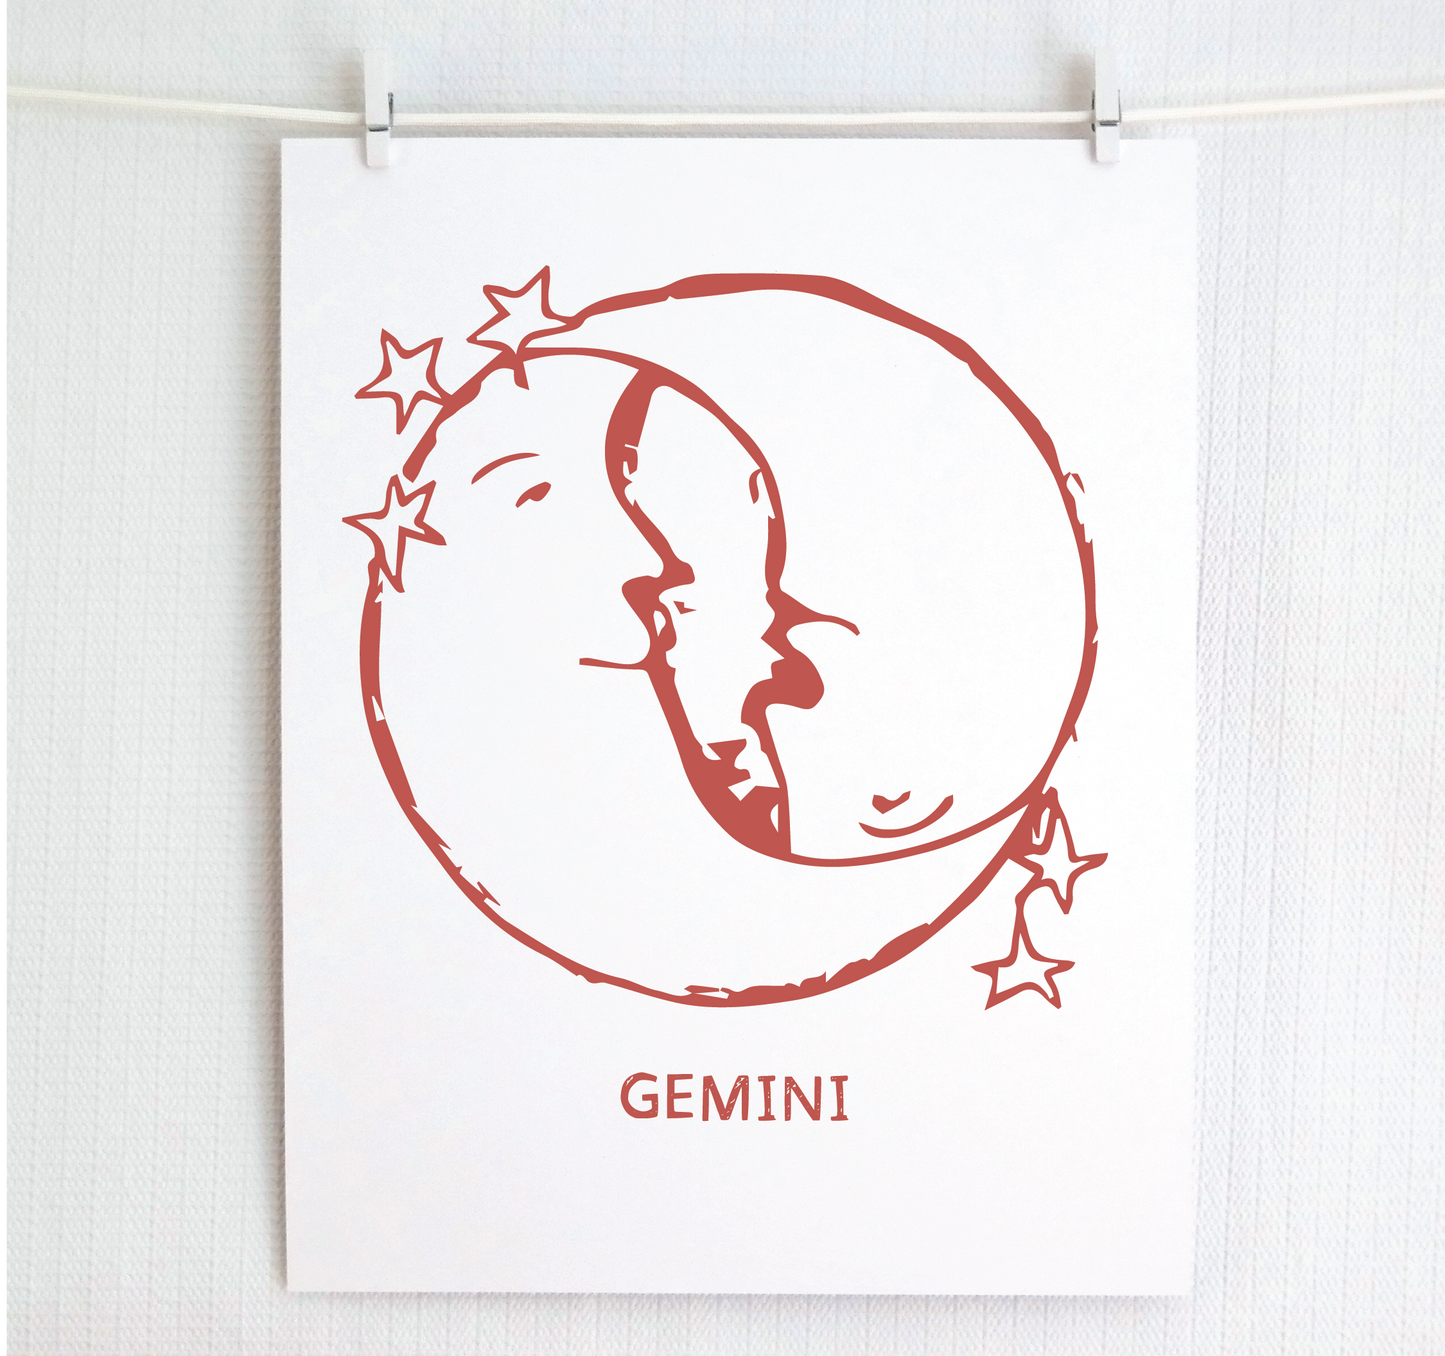 Signs of the Zodiac: GEMINI